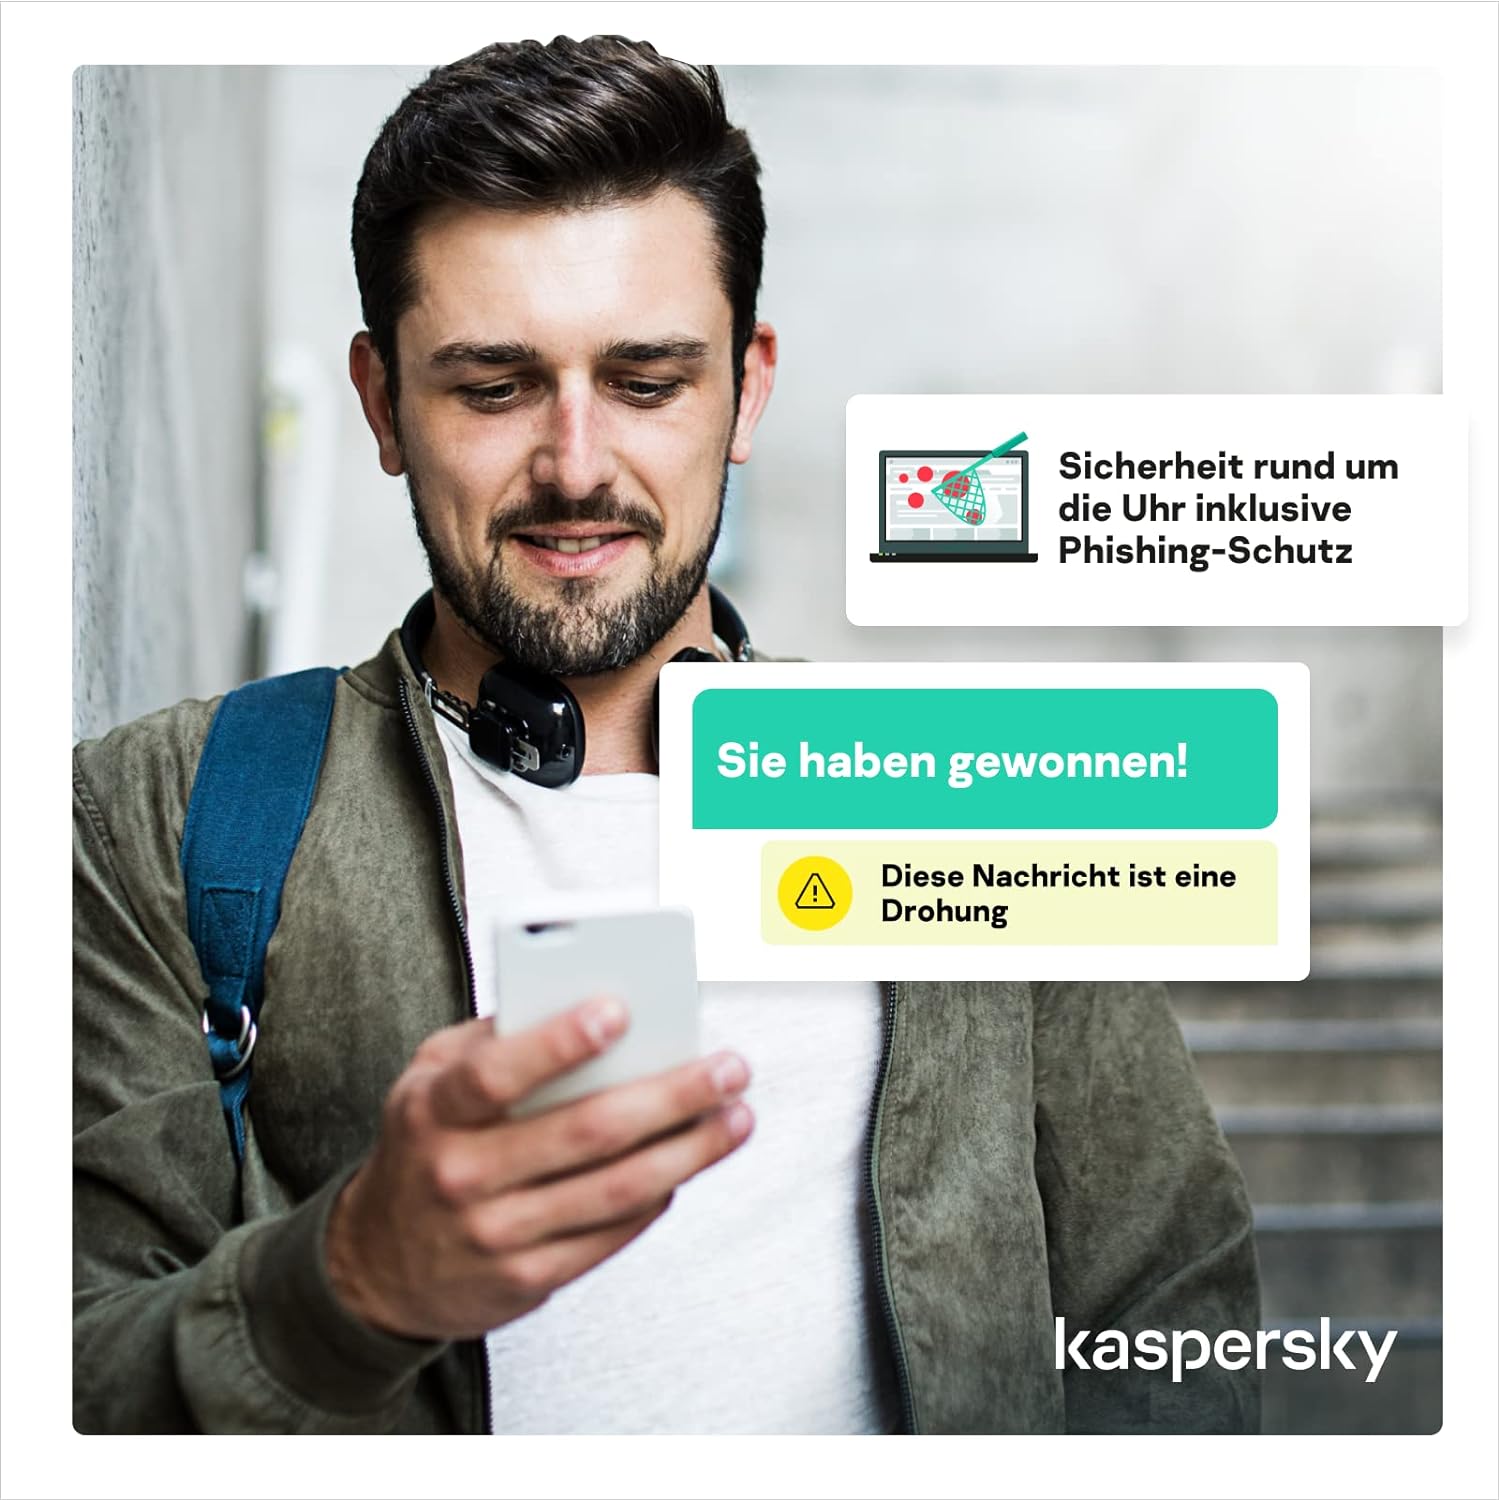 Kaspersky Plus Internet-Security 2024 /5-Gerät / 1-Jahr /BOX